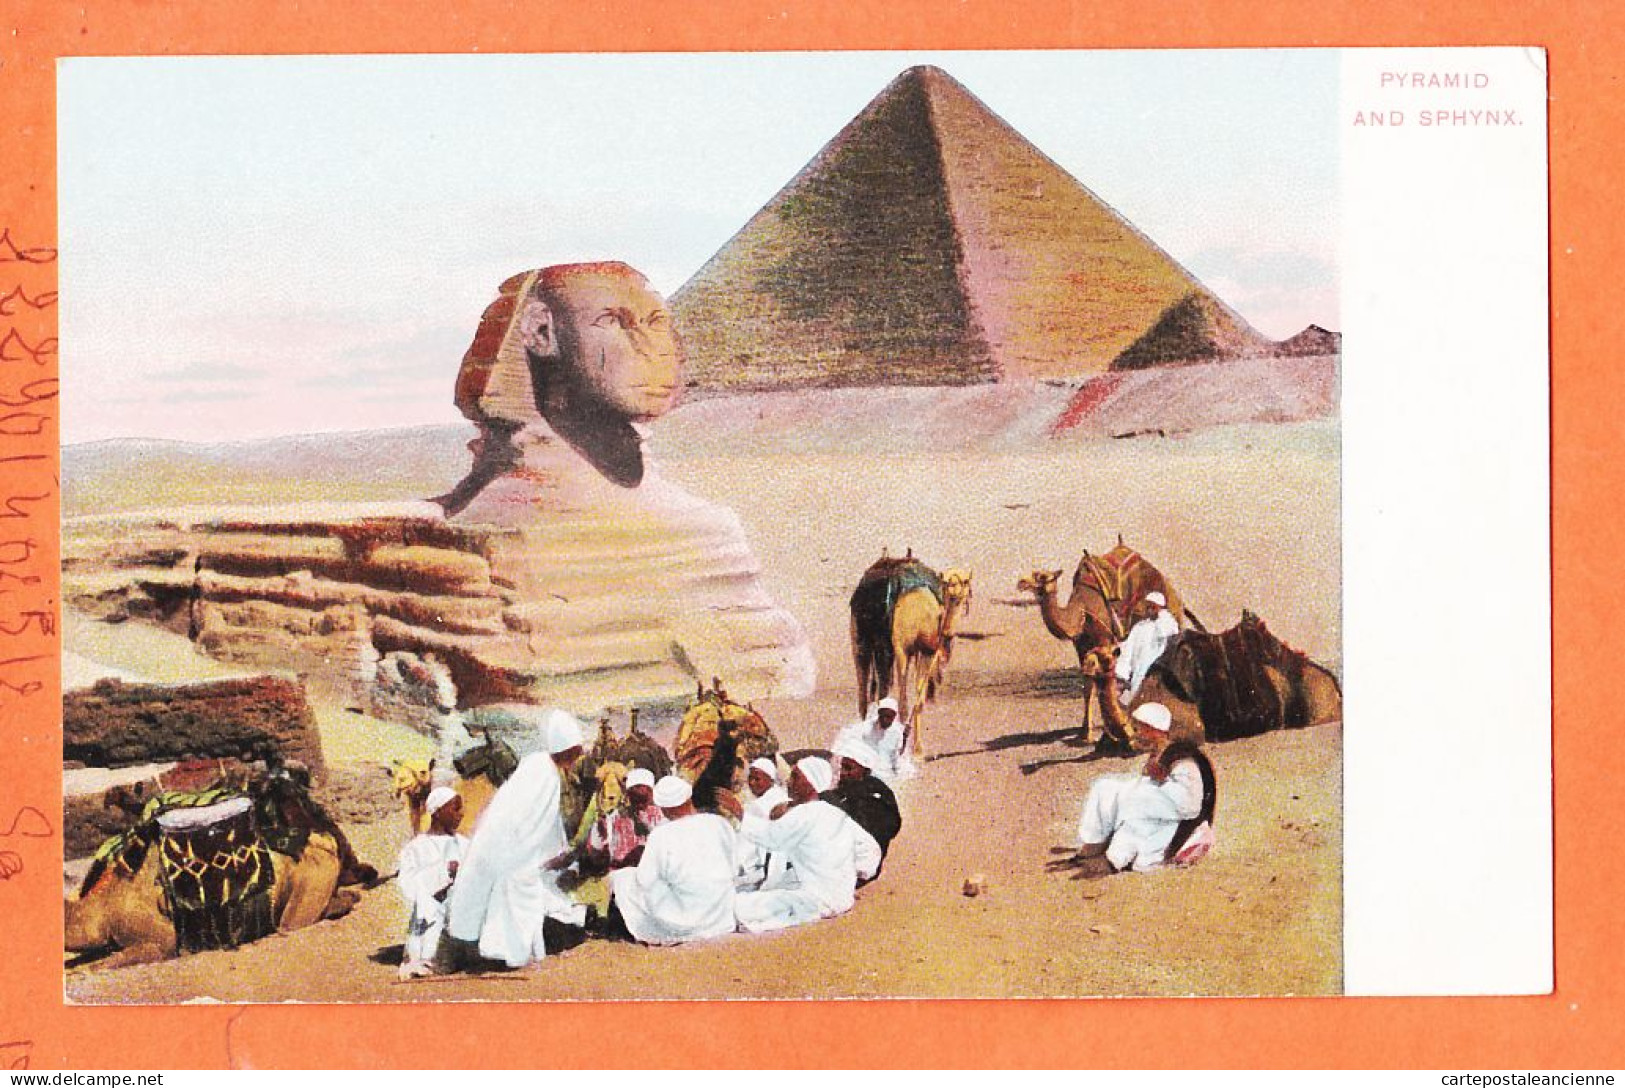 17355 / ⭐ ◉ Lichtenstern & Harari N° 20 Cairo ◉ Pyramid And Sphynx ◉ GIZEH Pyramide Et Sphinx 1905s ◉ Egypte Egypt  - Sphynx